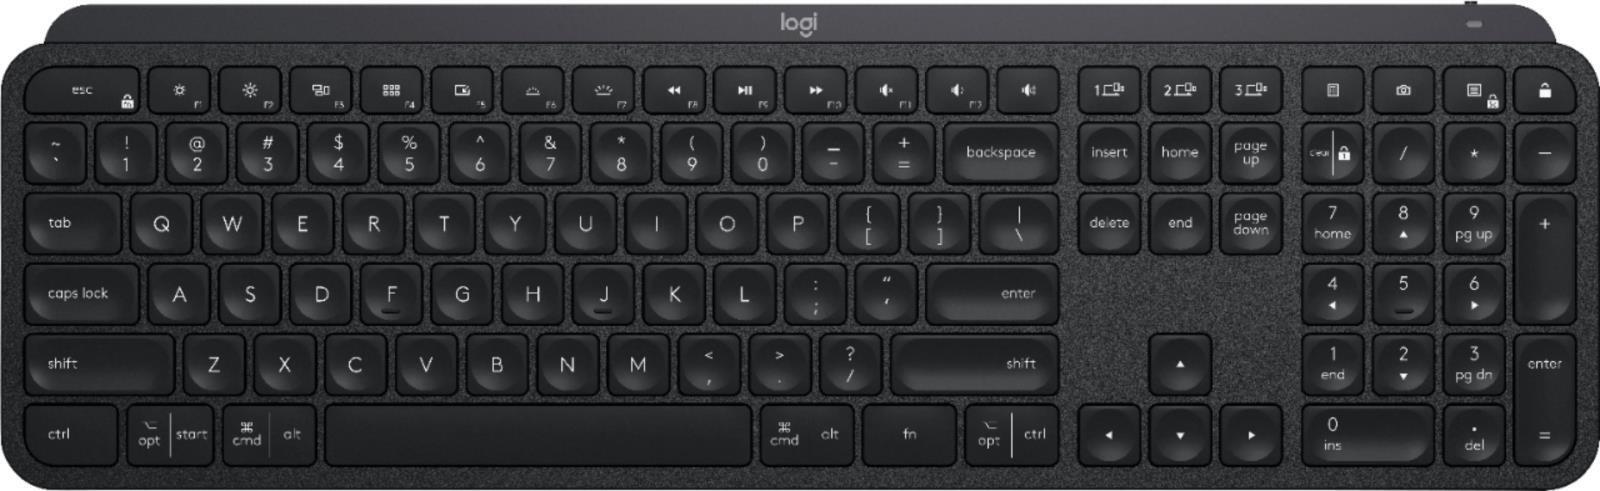 Logitech MX Keys Advanced Wireless Illuminated Keyboard PC Mac